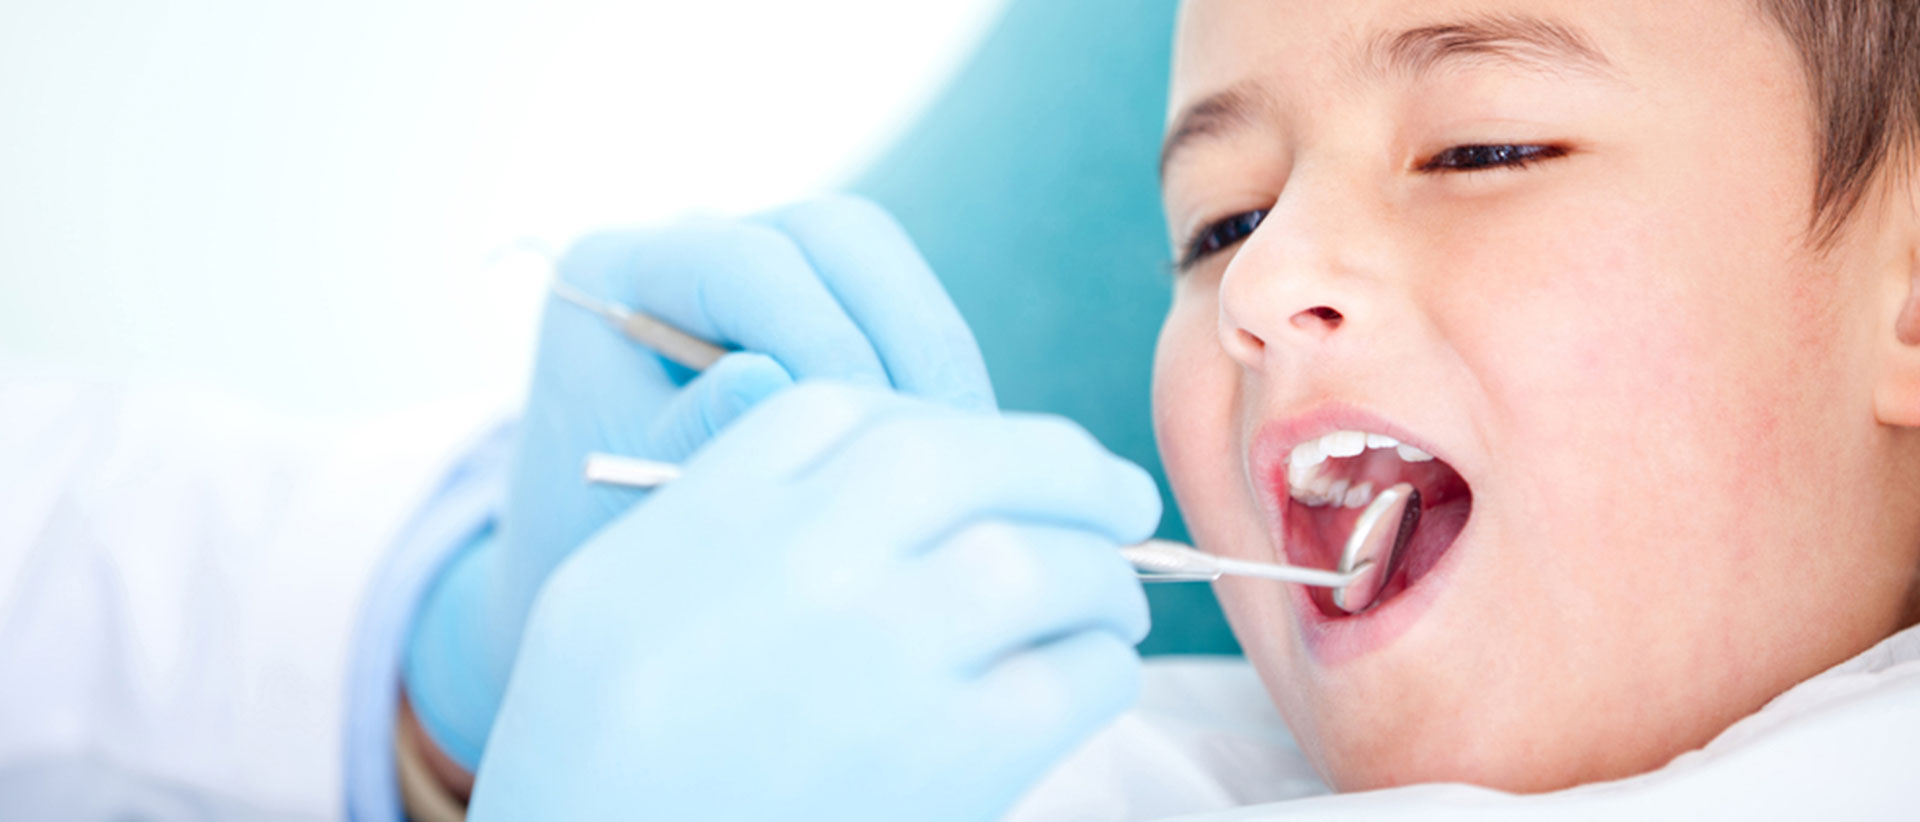 oral hygiene for child